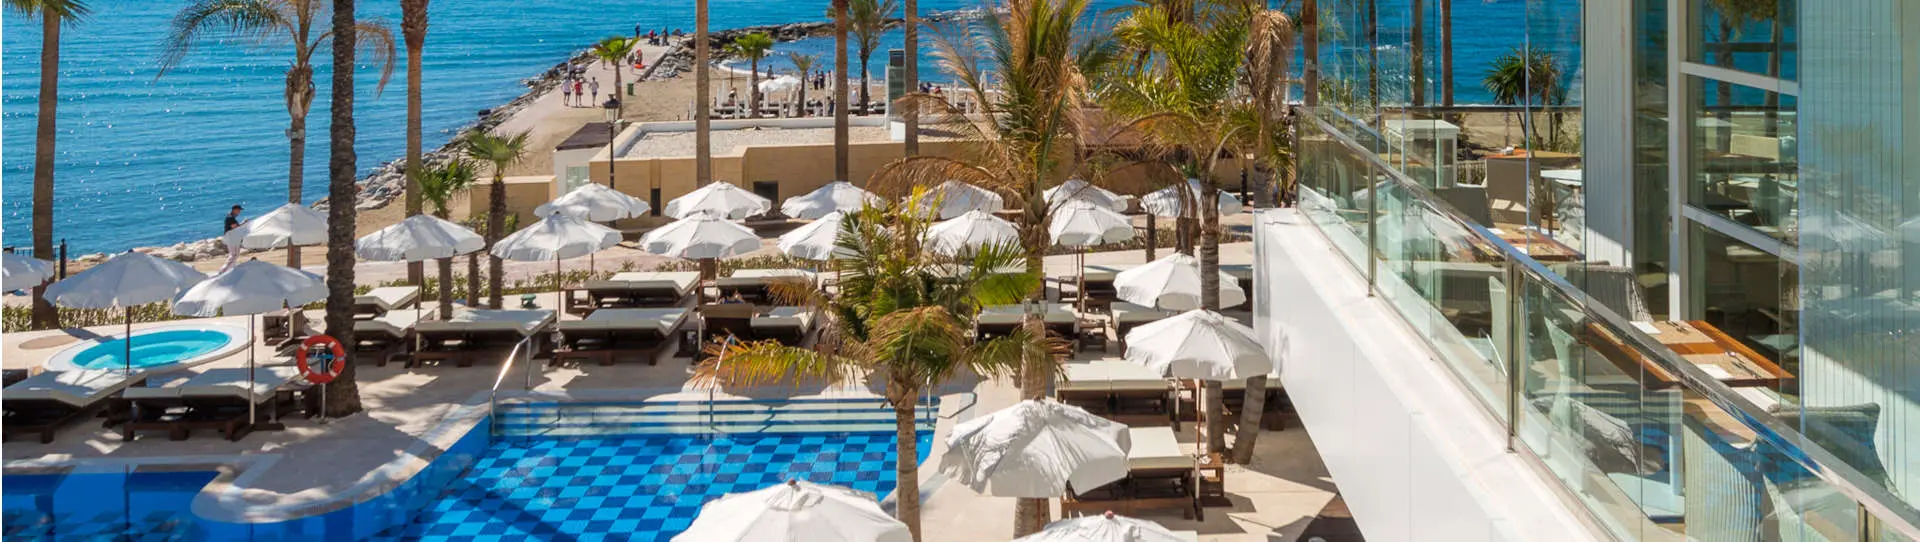 Spain golf holidays - Amàre Marbella Beach Hotel - Photo 1